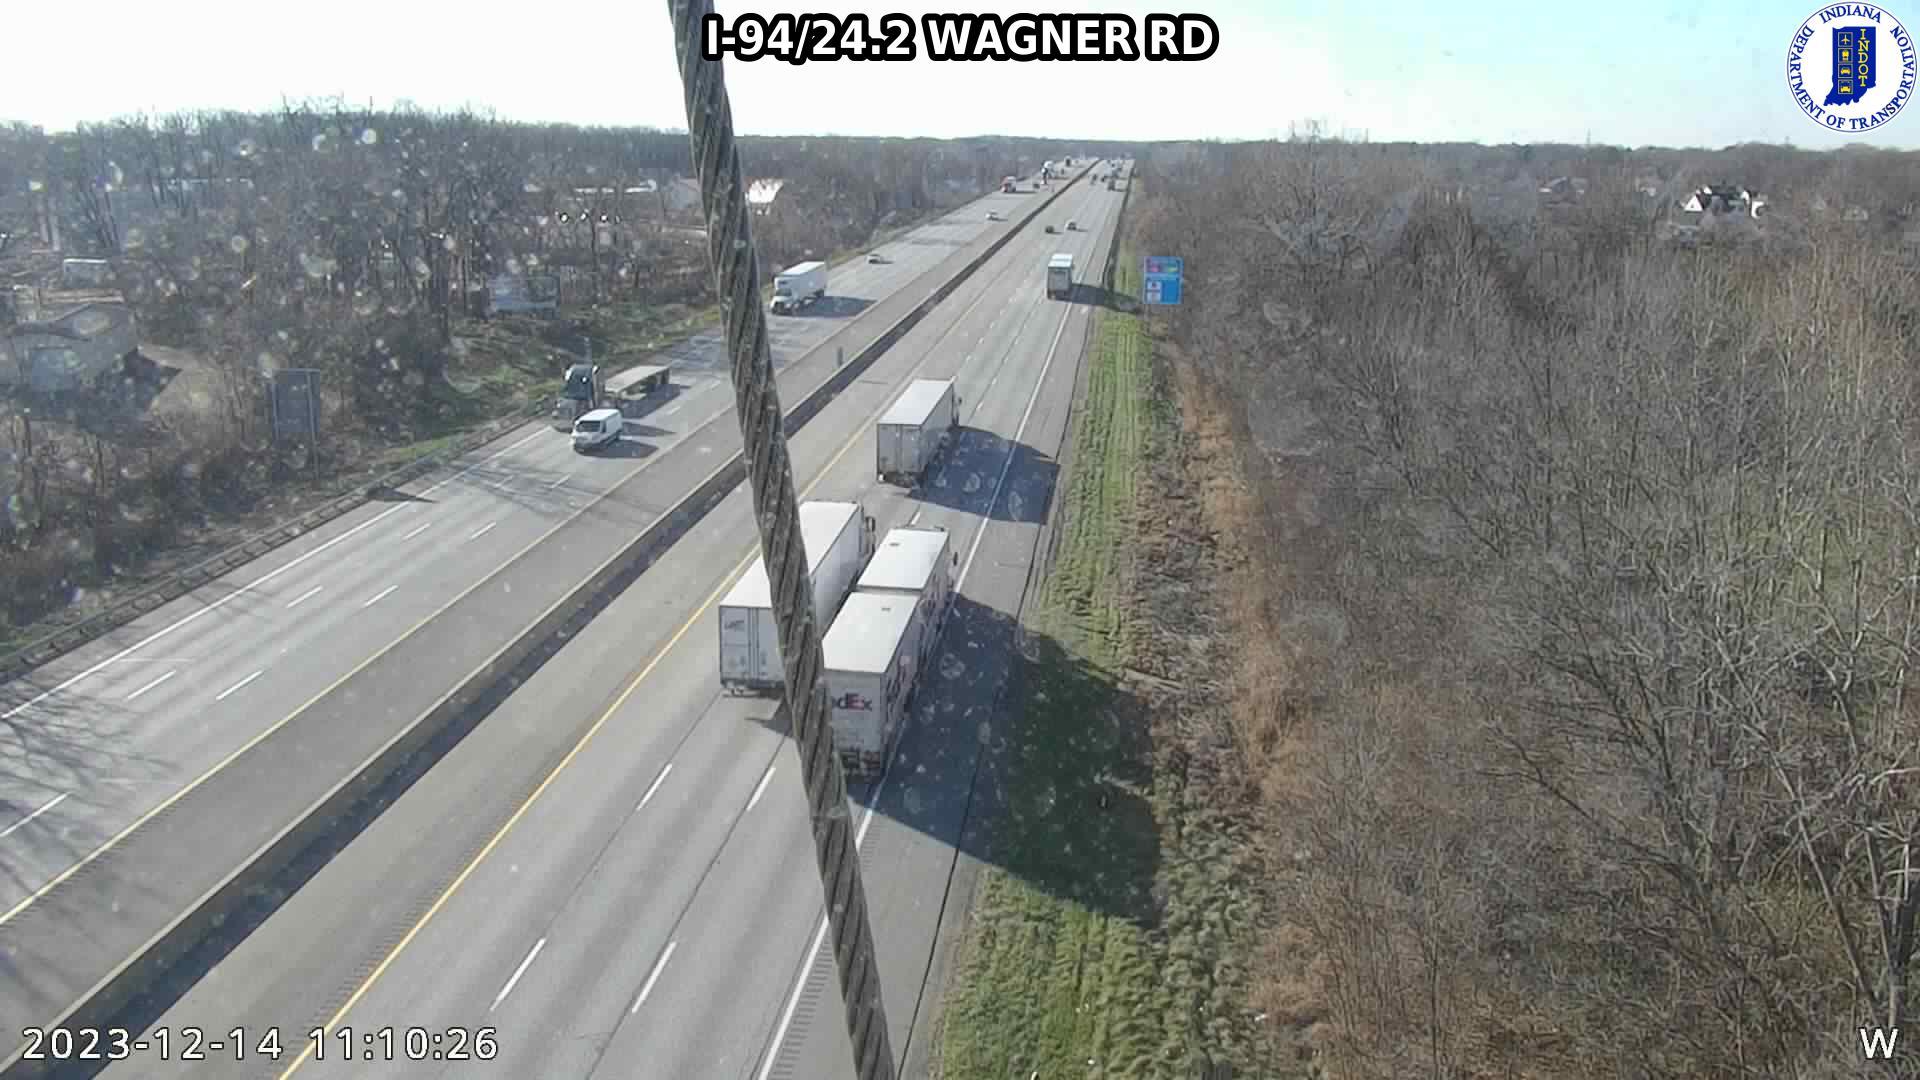 Traffic Cam Porter: I-94: I-94/24.2 WAGNER RD : I-94/24.2 WAGNER RD Player